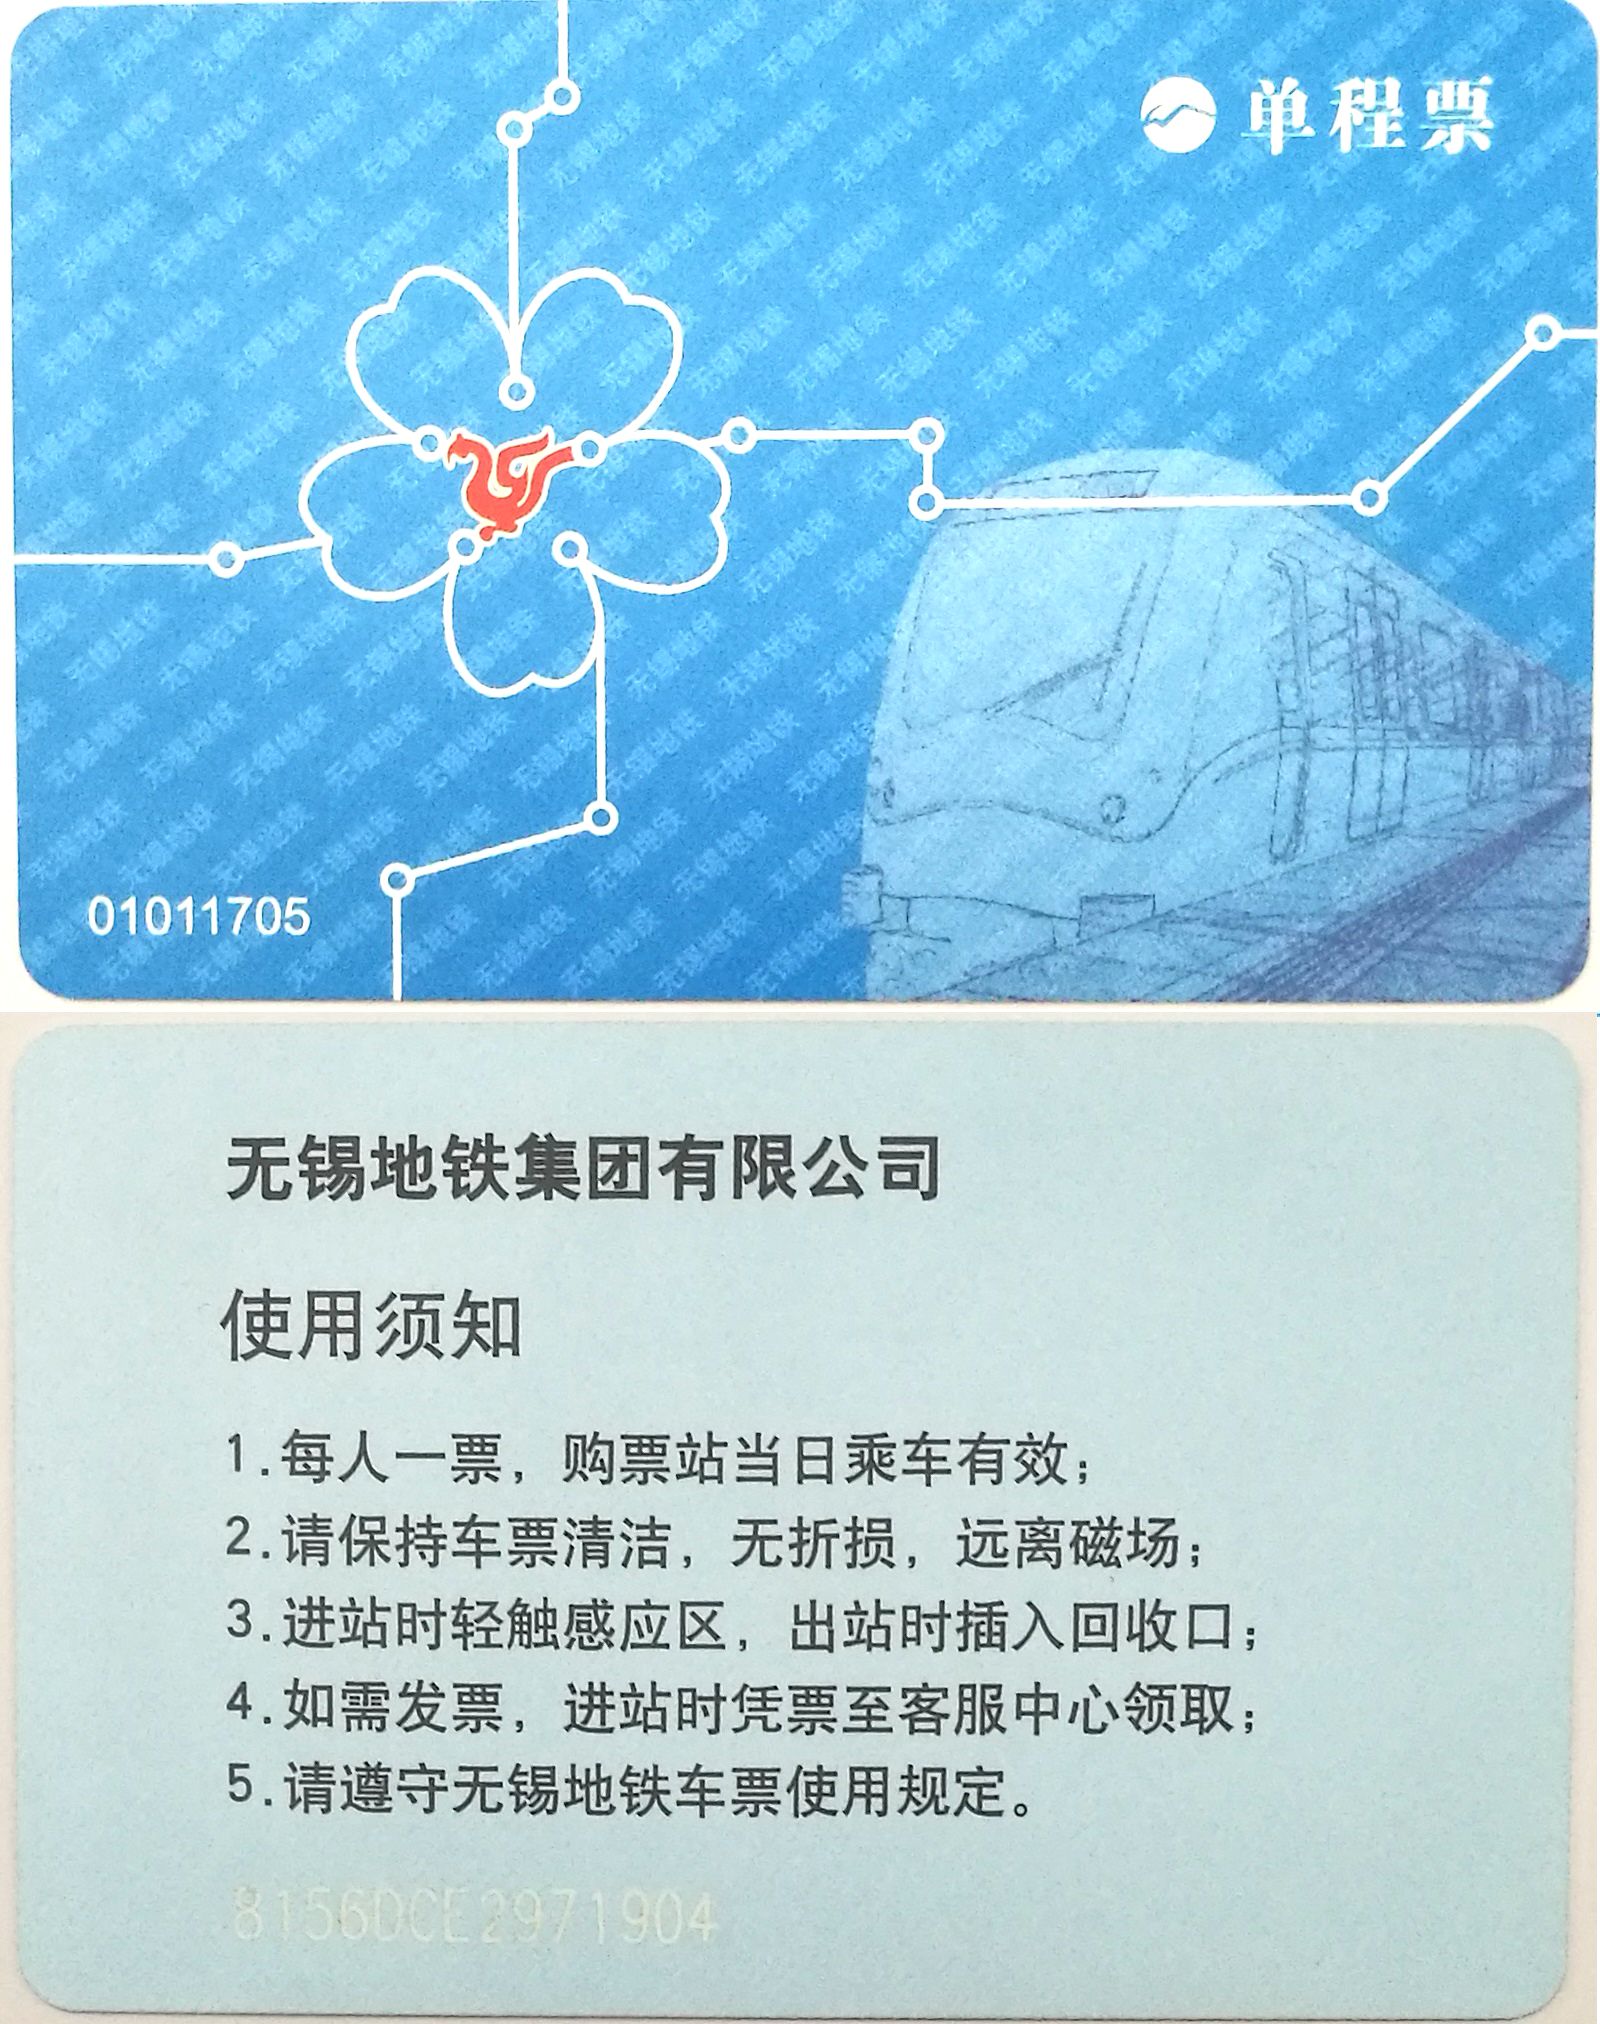 T5275, China Wuxi City, Metro Card (Subway Ticket), One Way 2017, Invalid